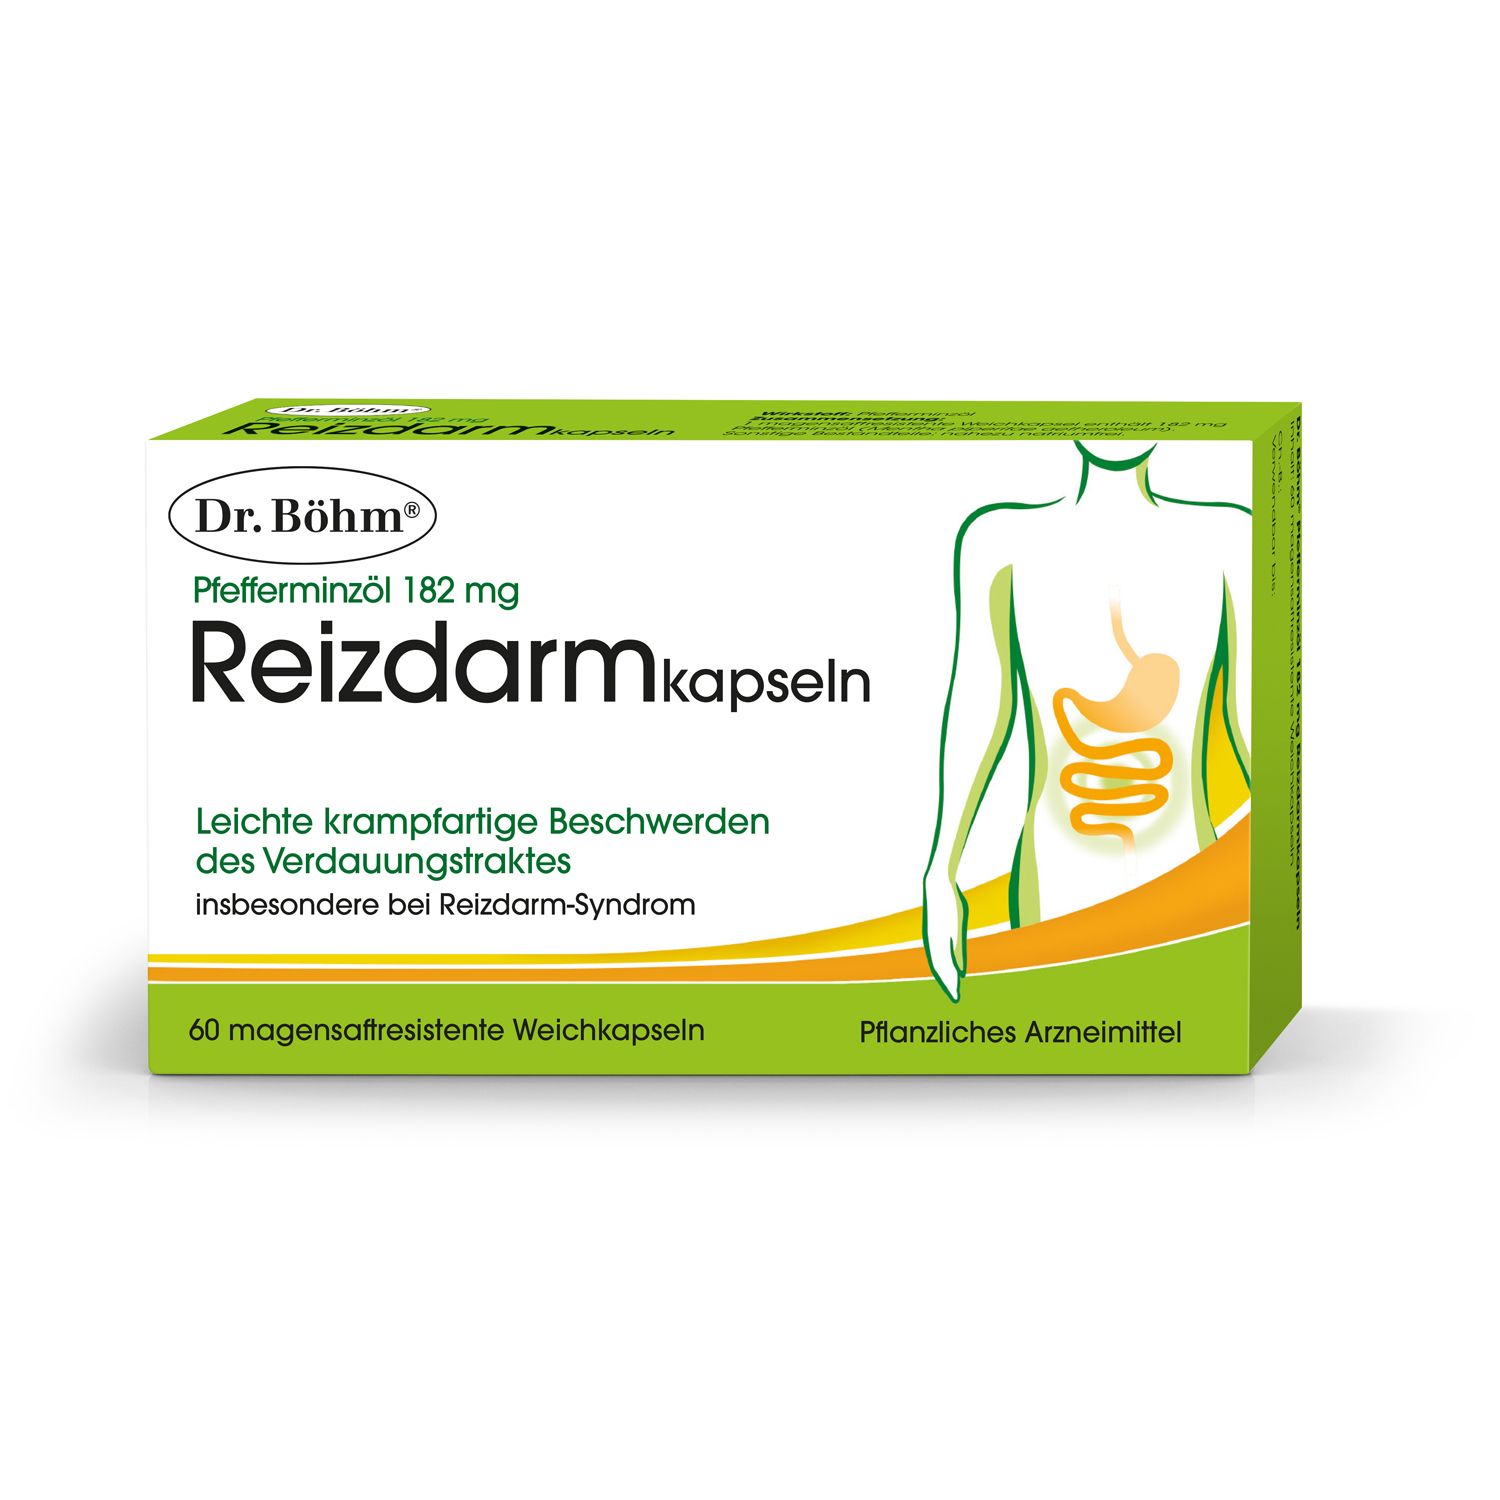 Dr. Böhm® Pfefferminzöl 182 mg Reizdarmkapseln